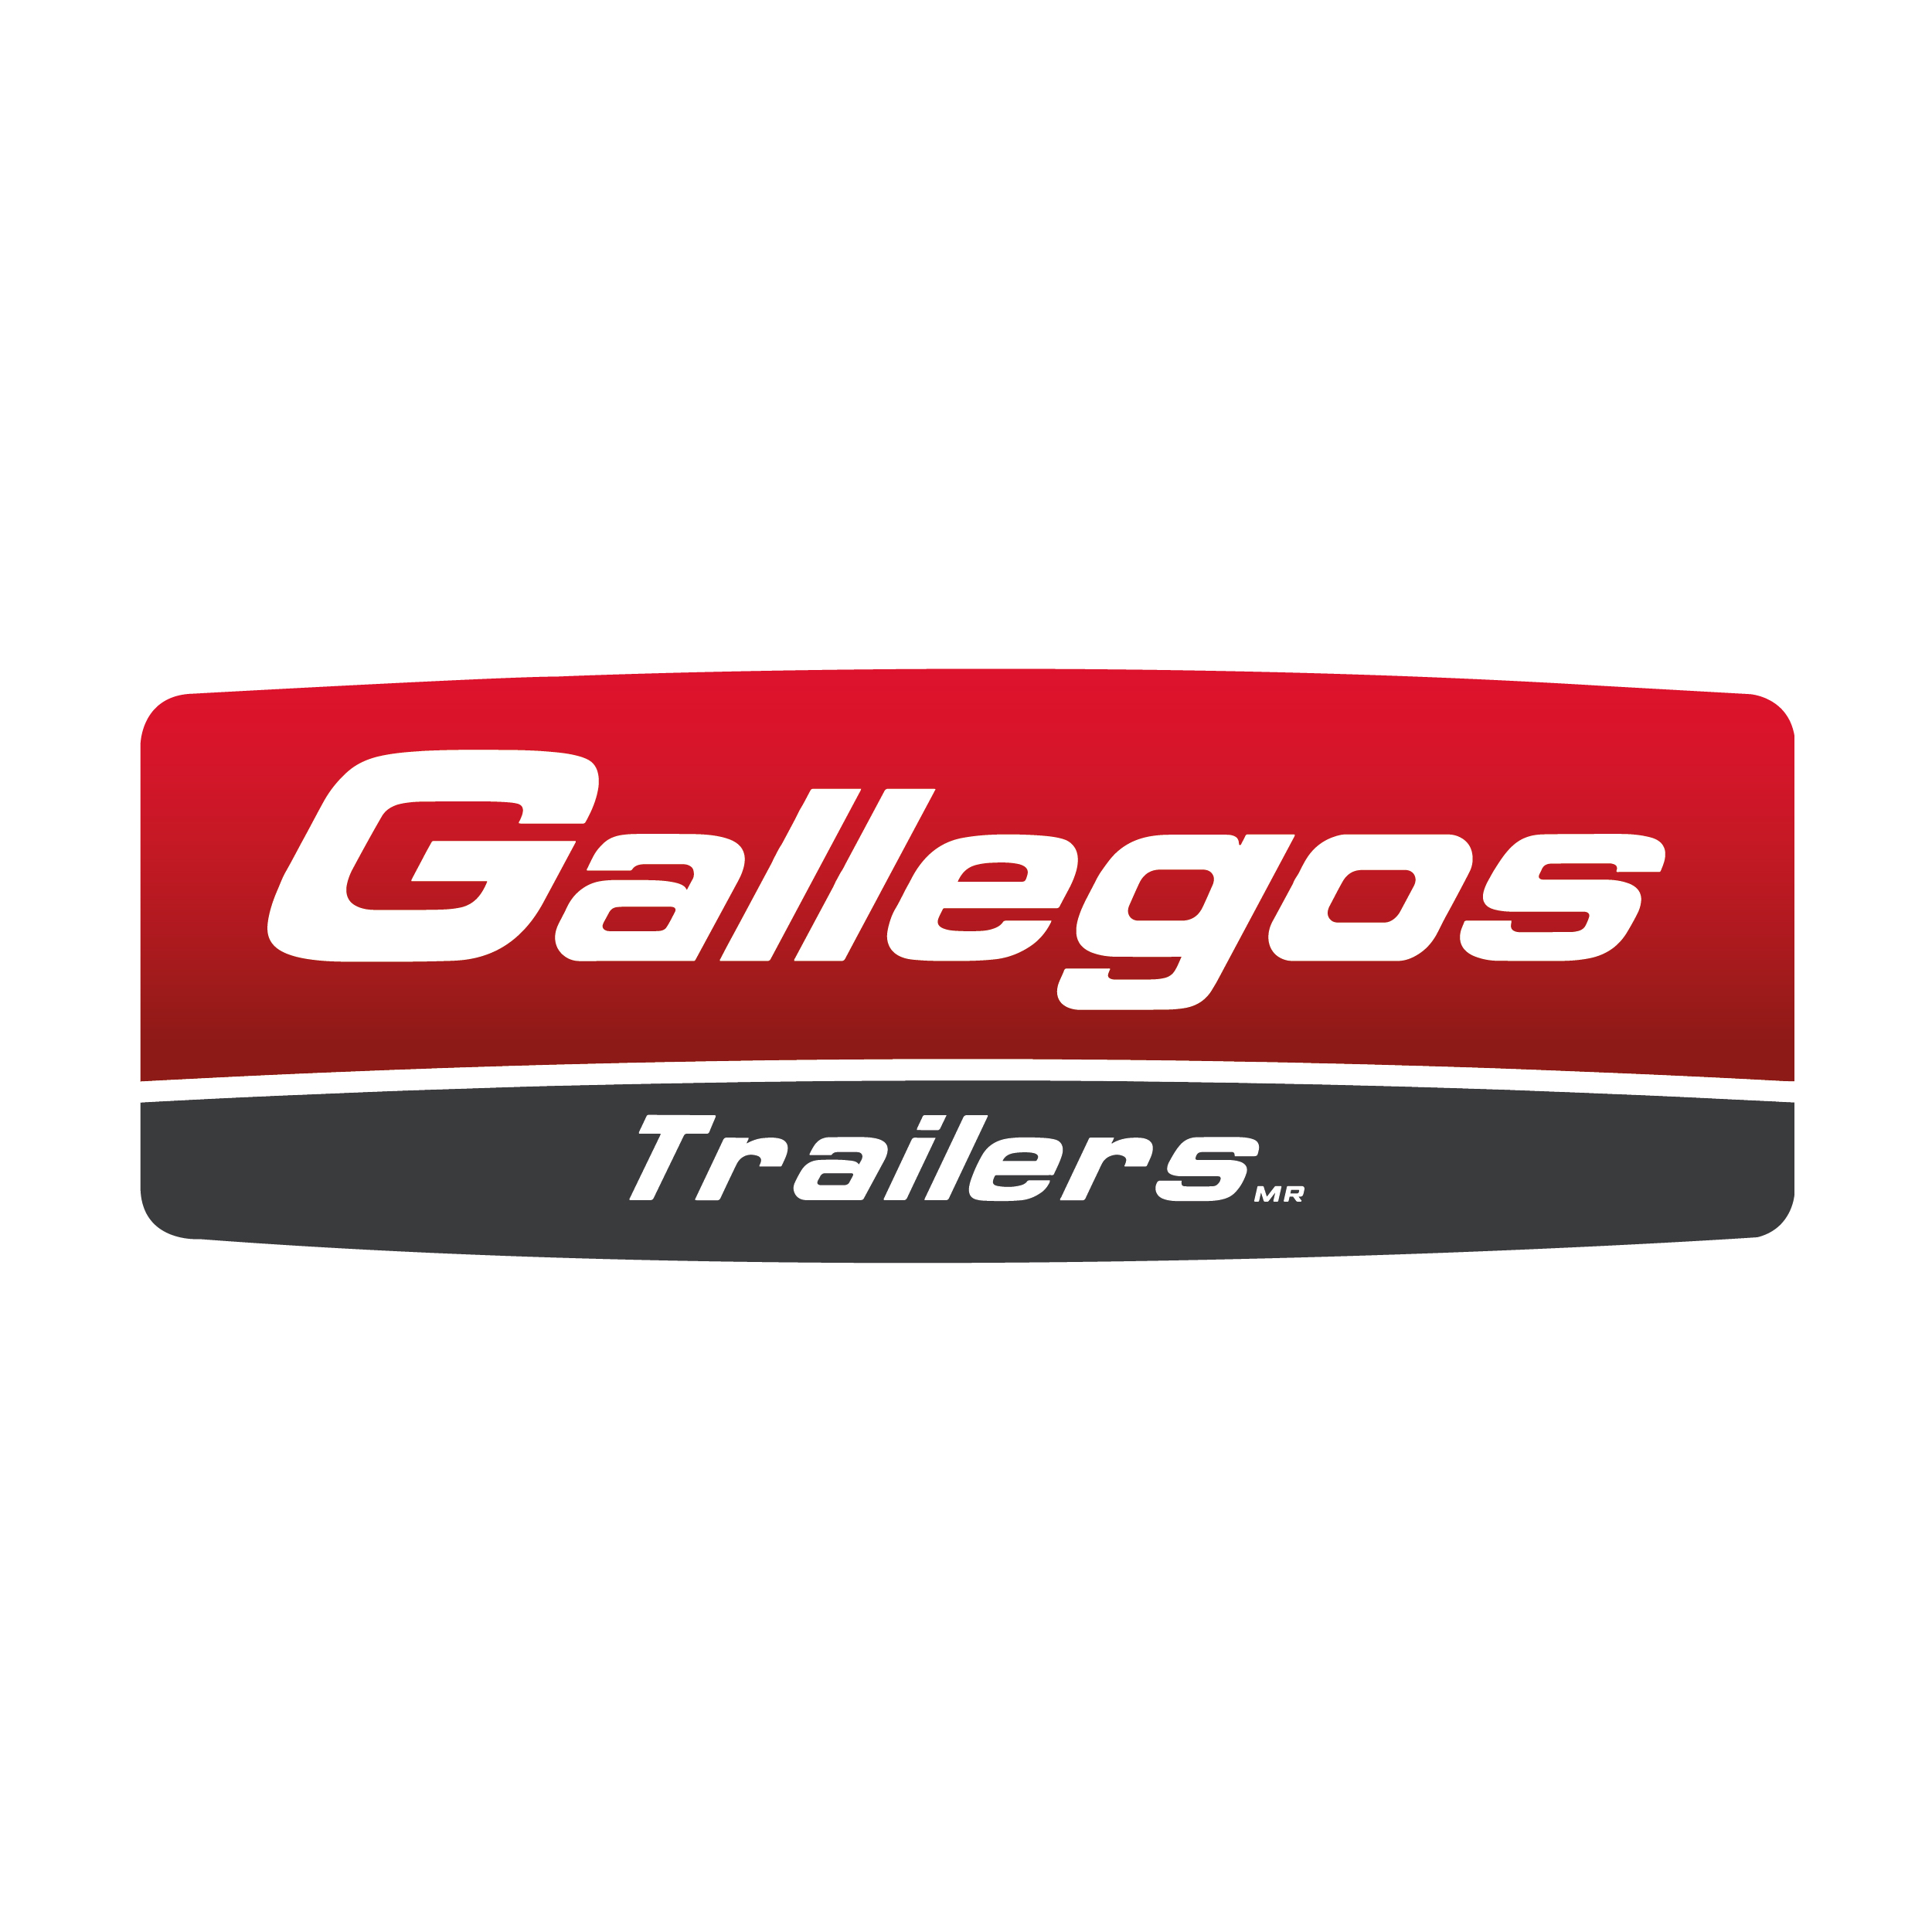 Gallegos Trailers